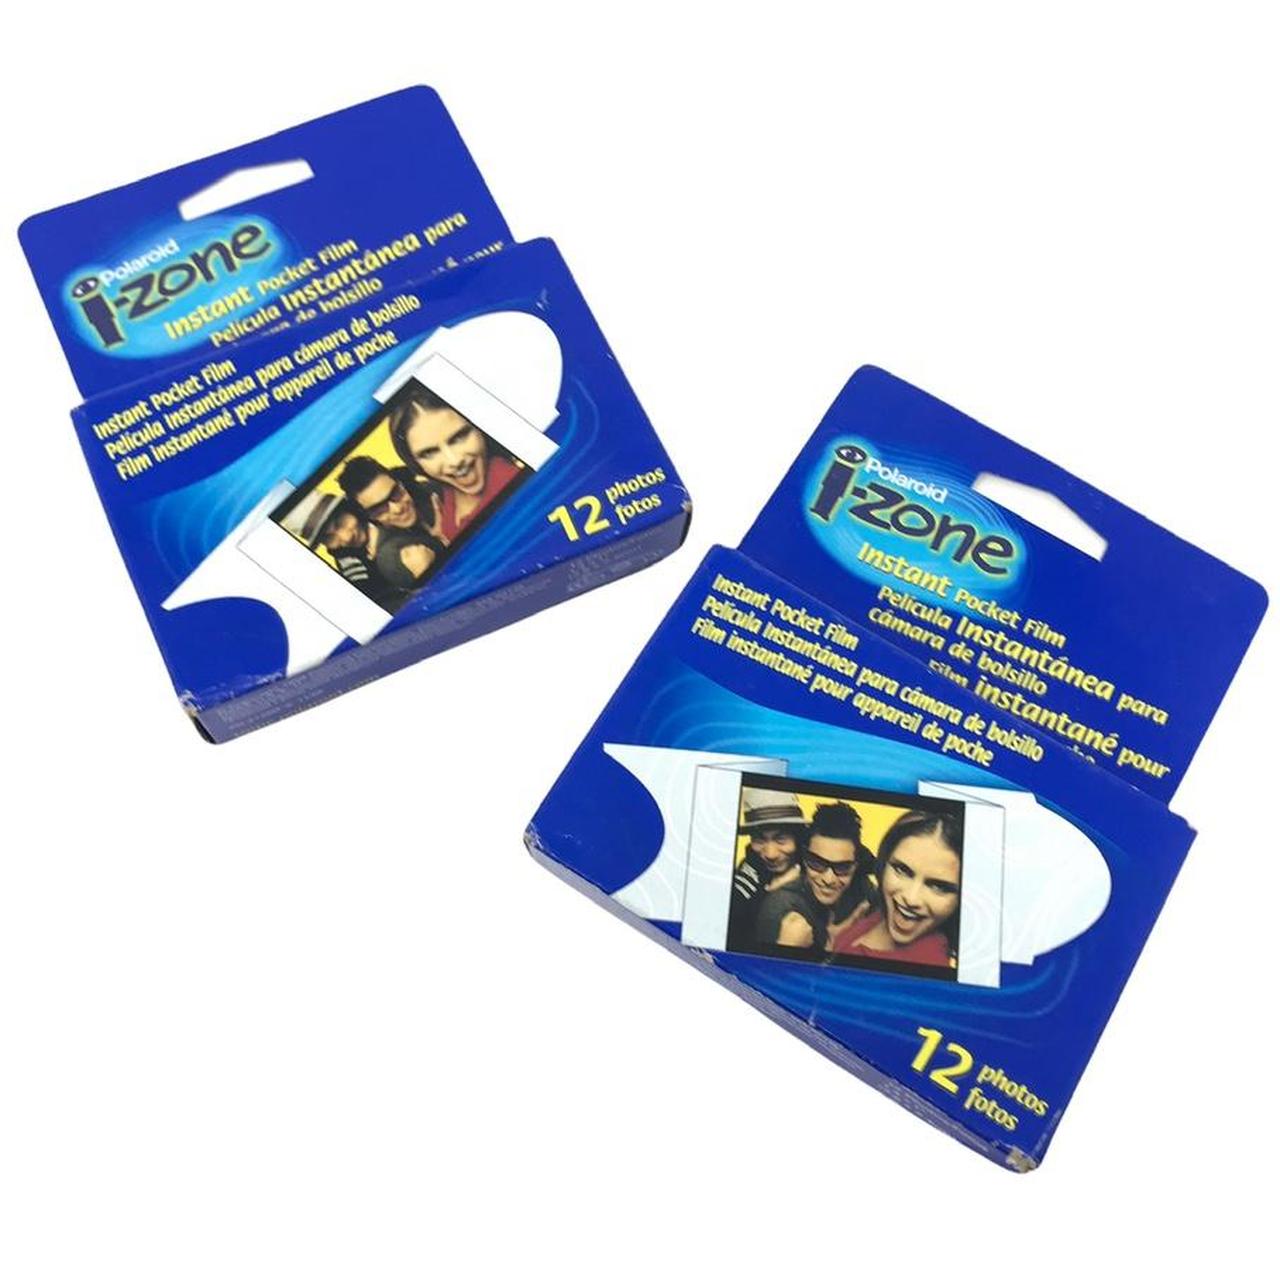 Product Image 1 - Polaroid I-Zone Instant Pocket Film

Two